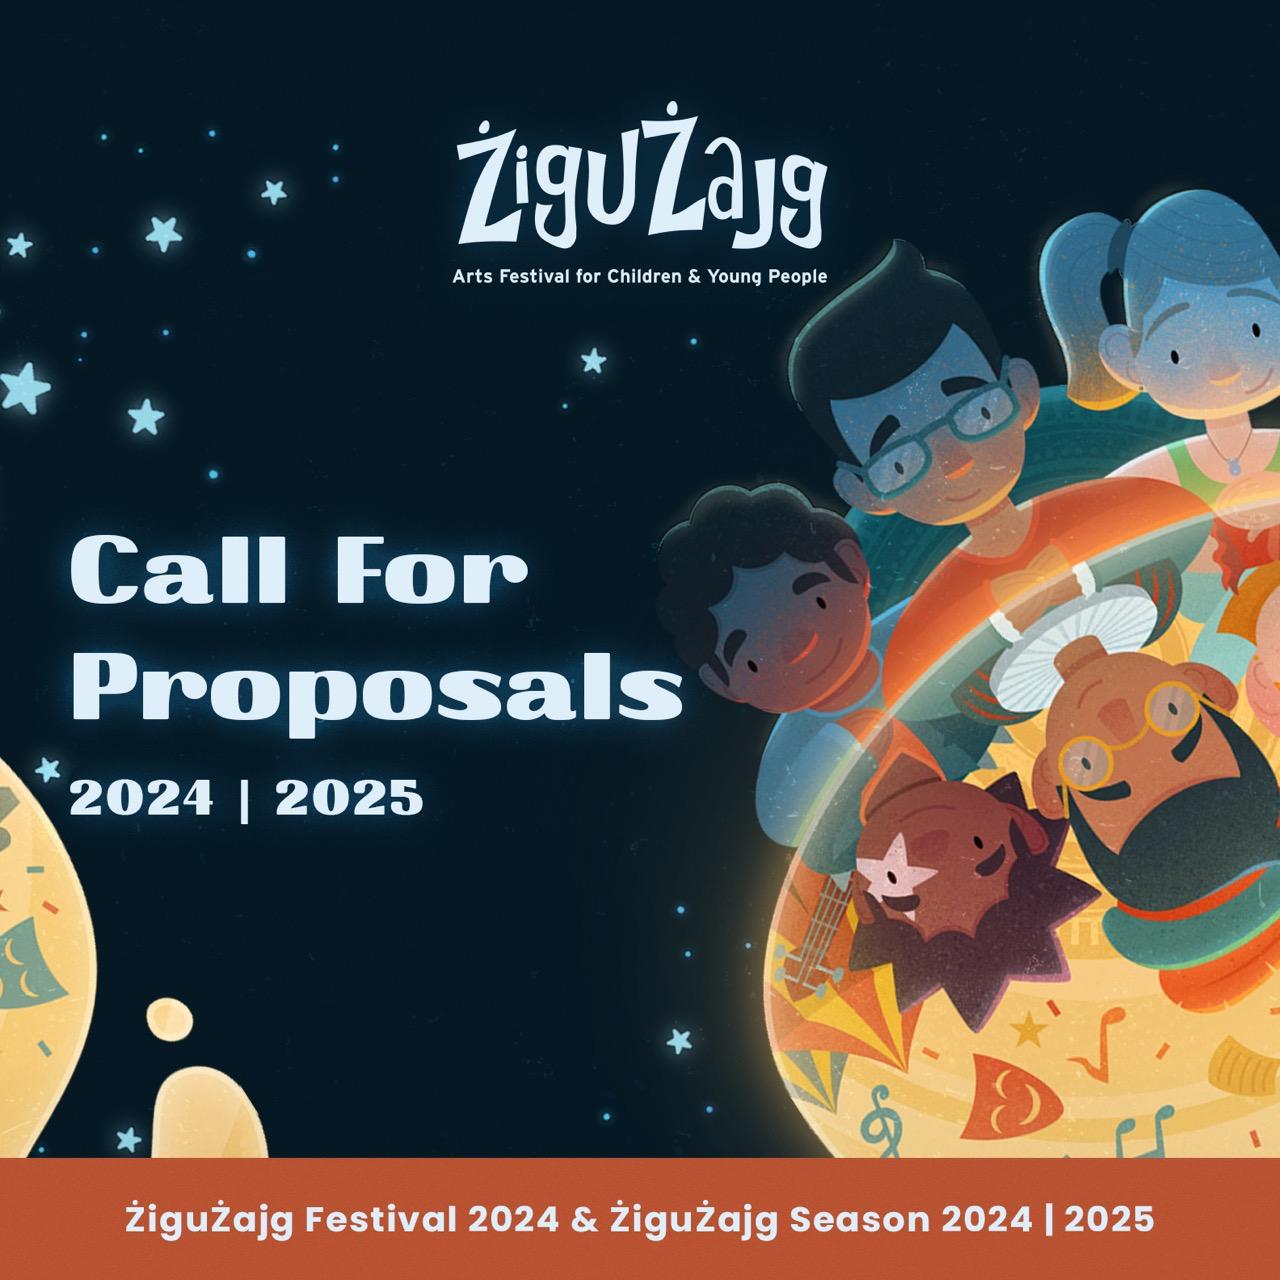 Call for Proposals for ŻiguŻajg 2024/2025